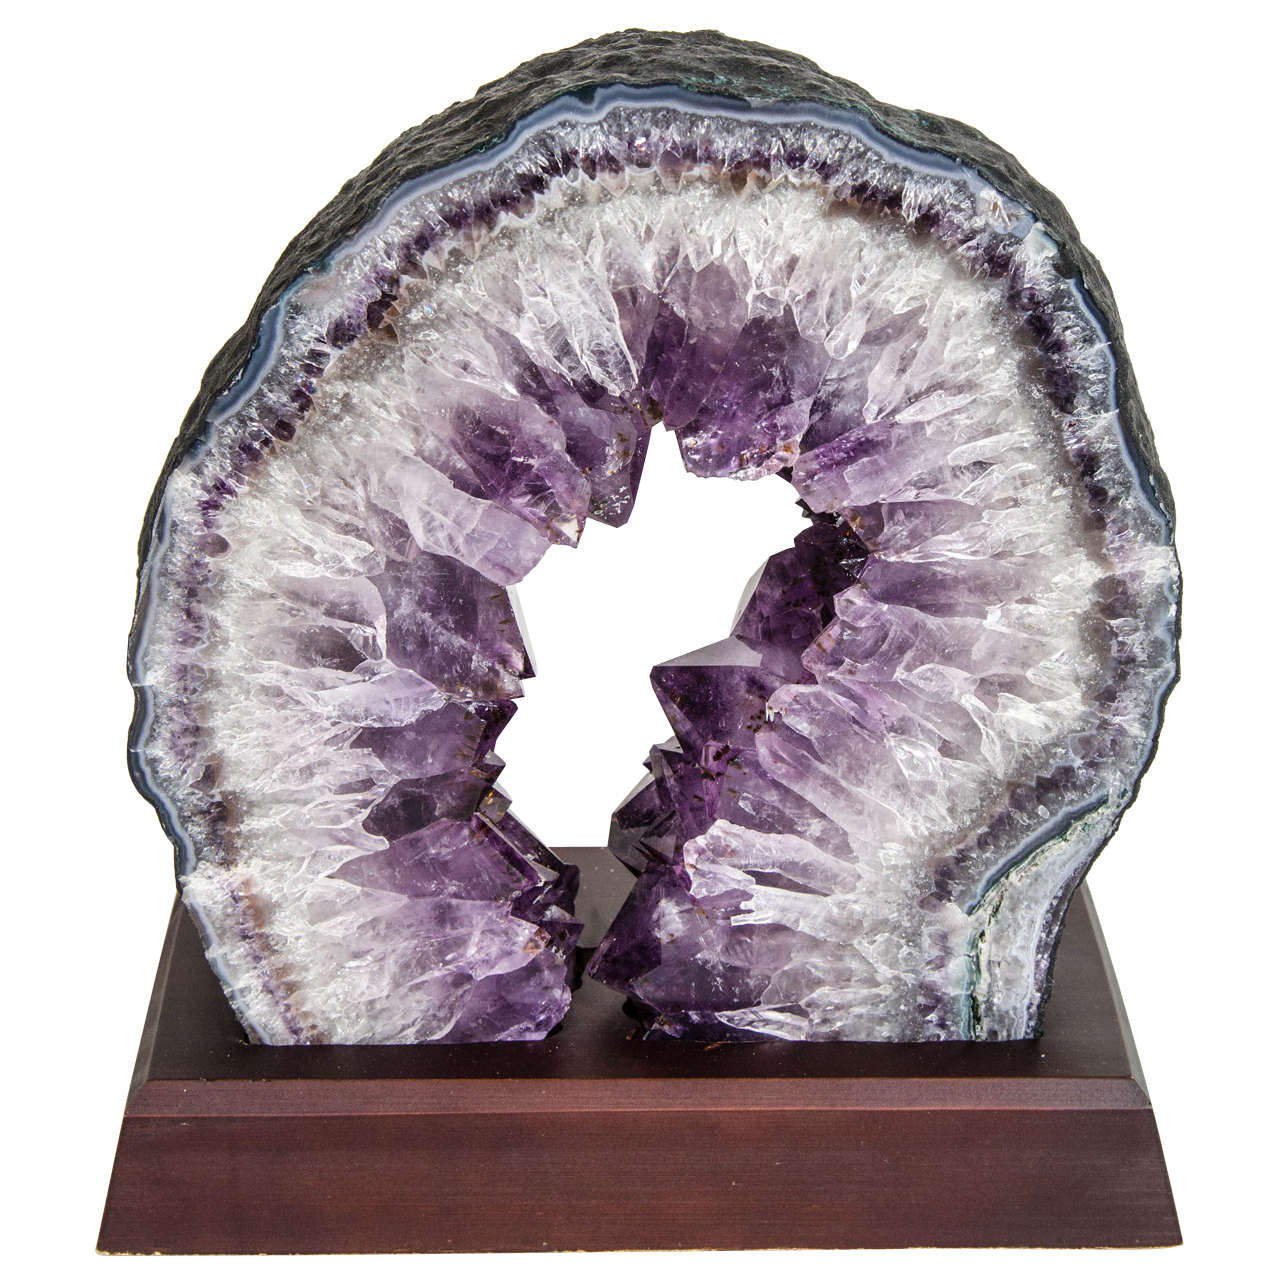 Exquisite Quartz and Amethyst Geode Sculpture on Stand